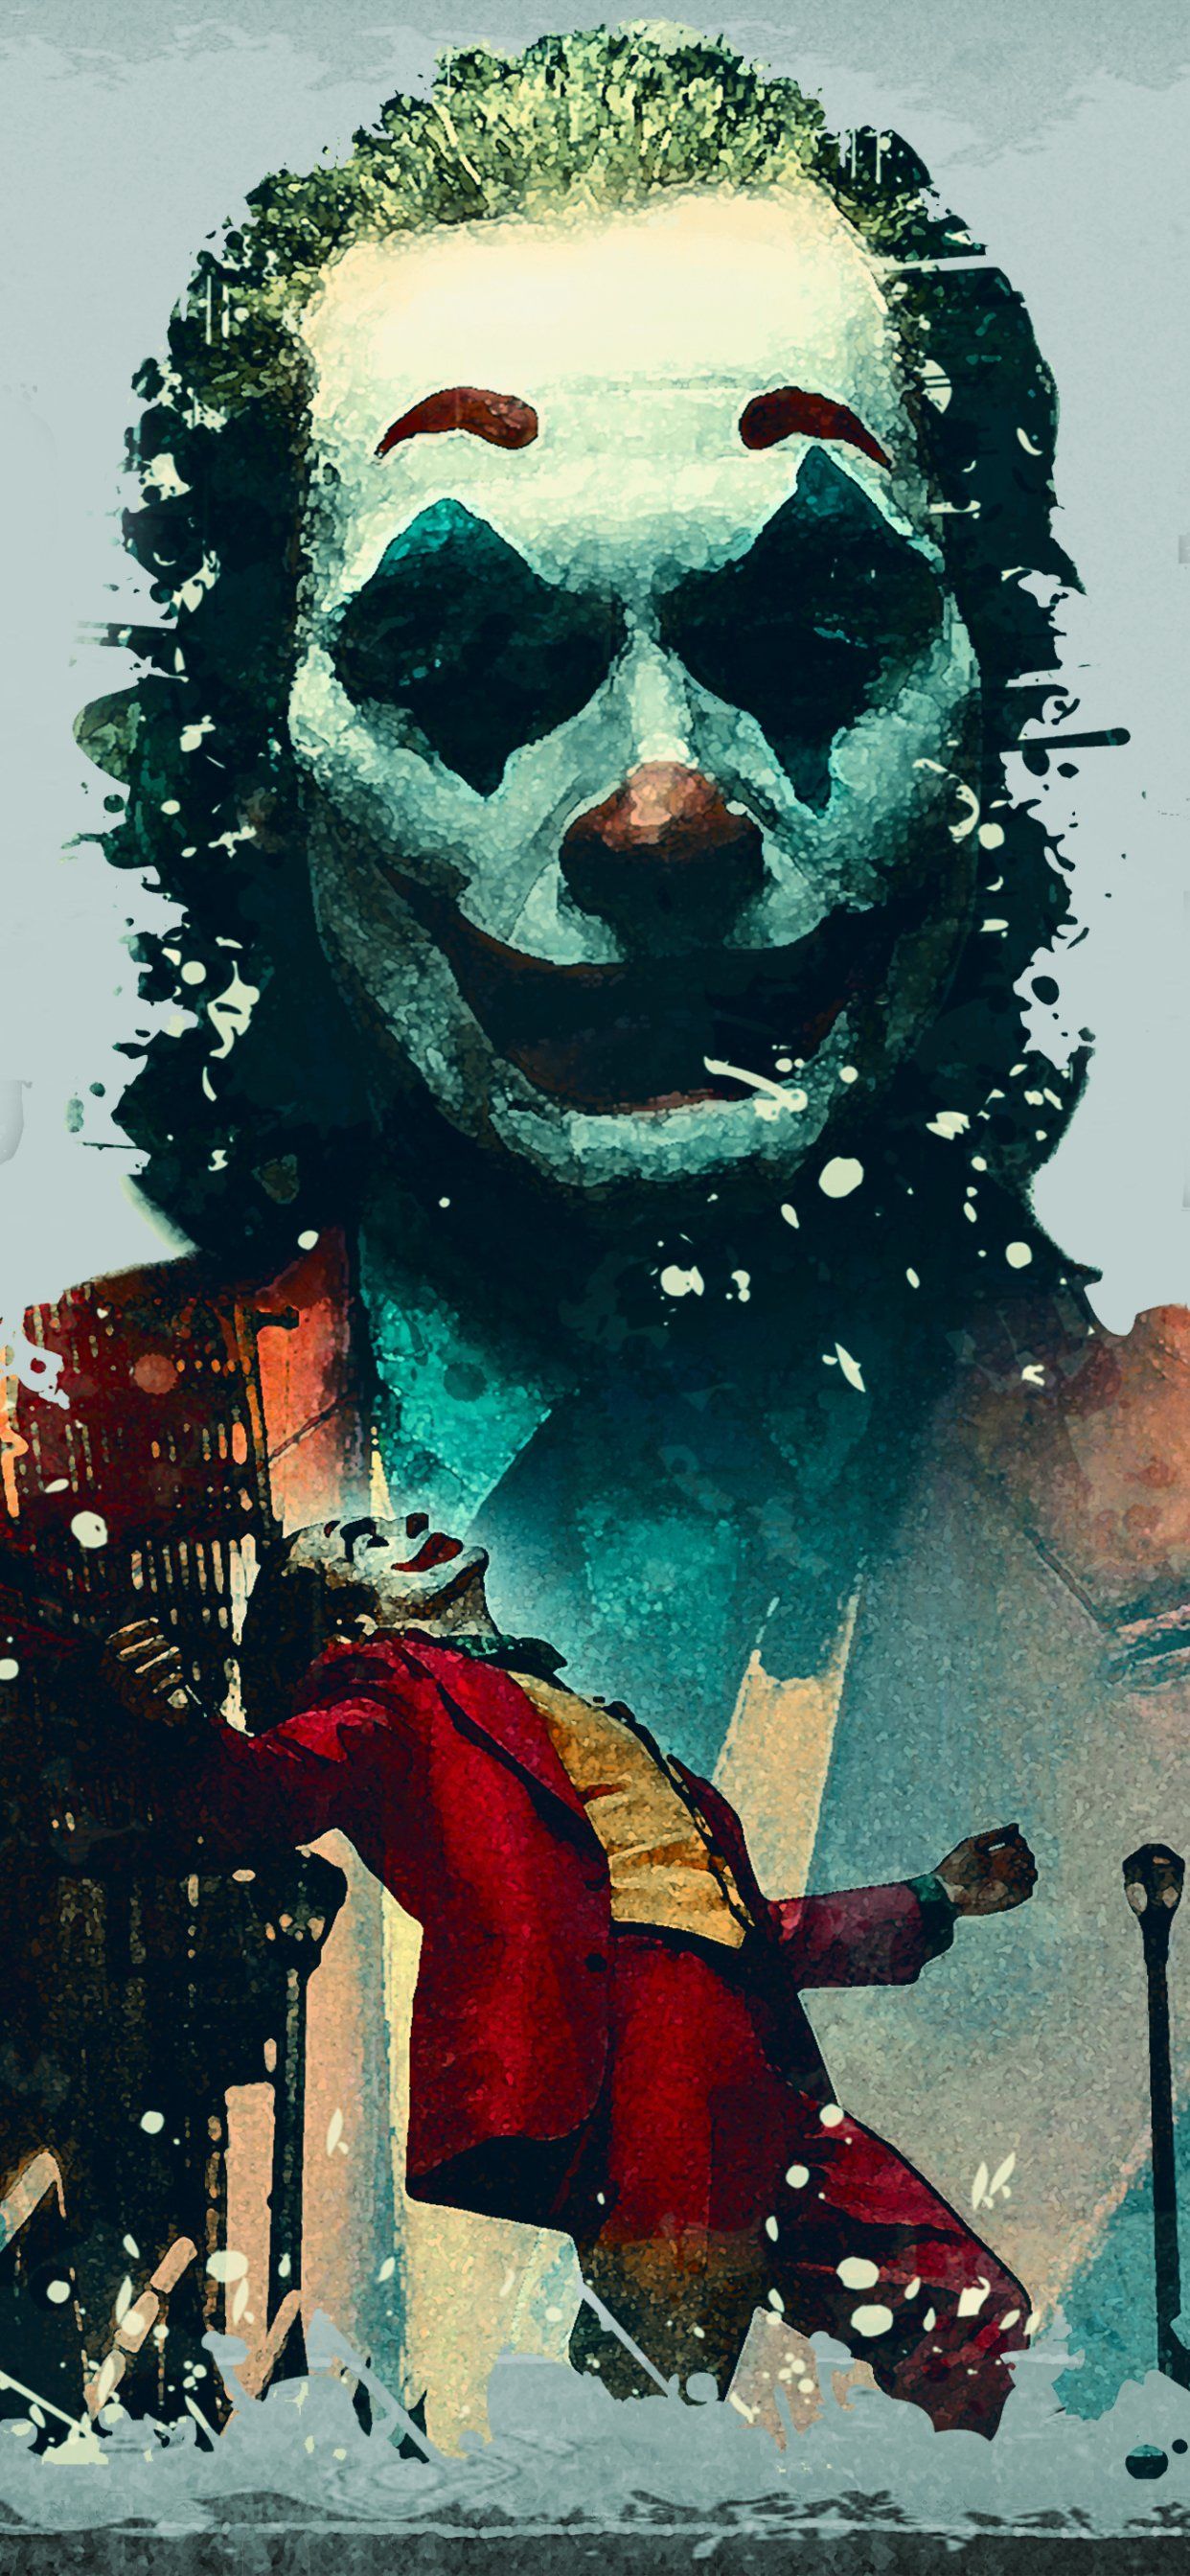 Joker 2019 Wallpaper iPhone Xs Max